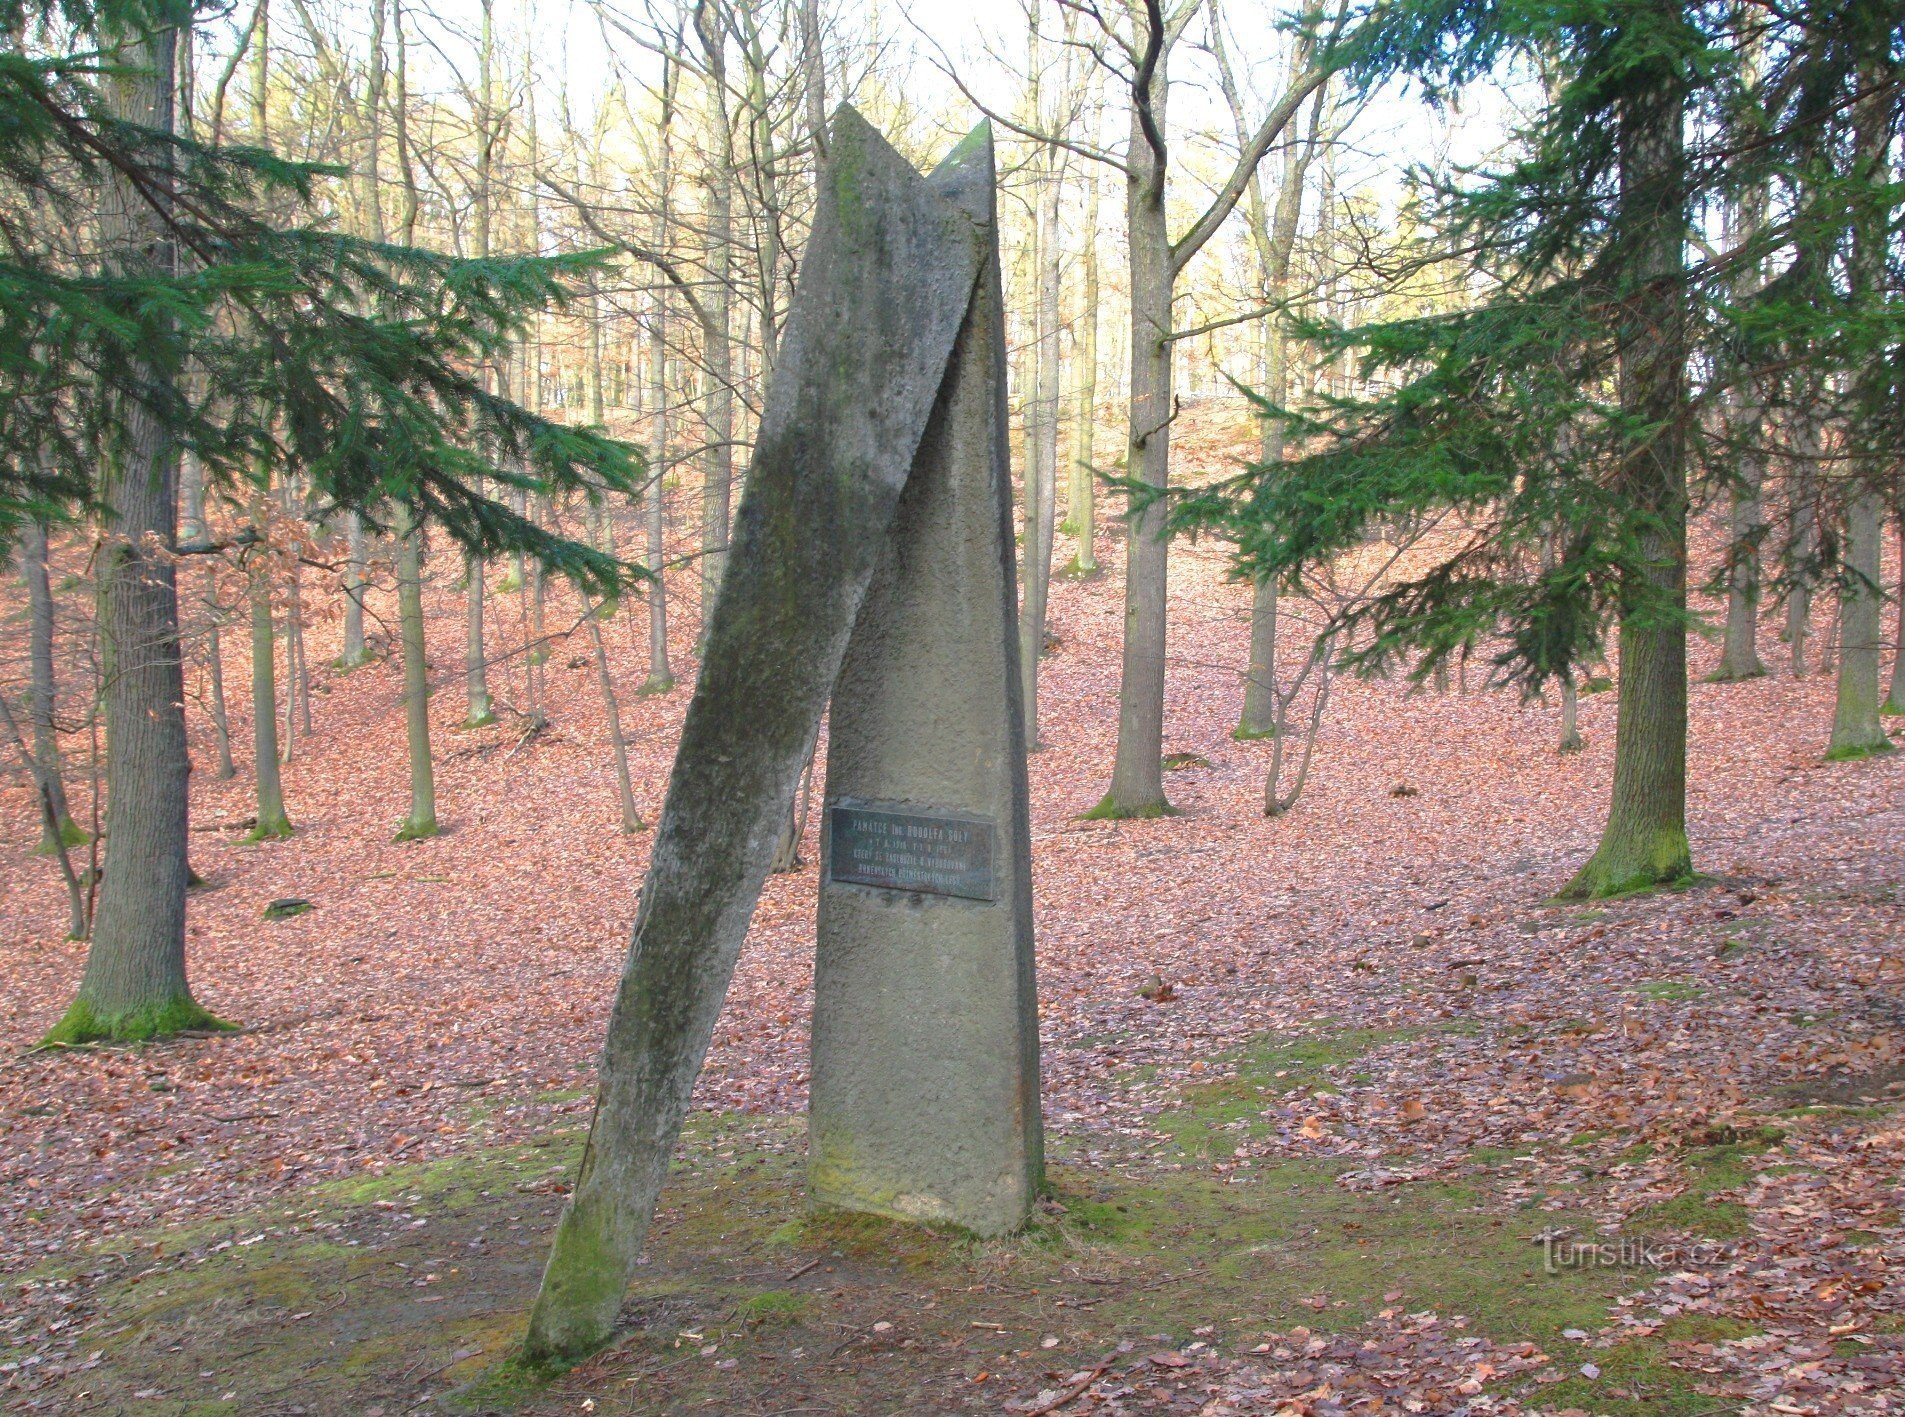 A concrete pylon with a commemorative plaque of Rudolf Gola